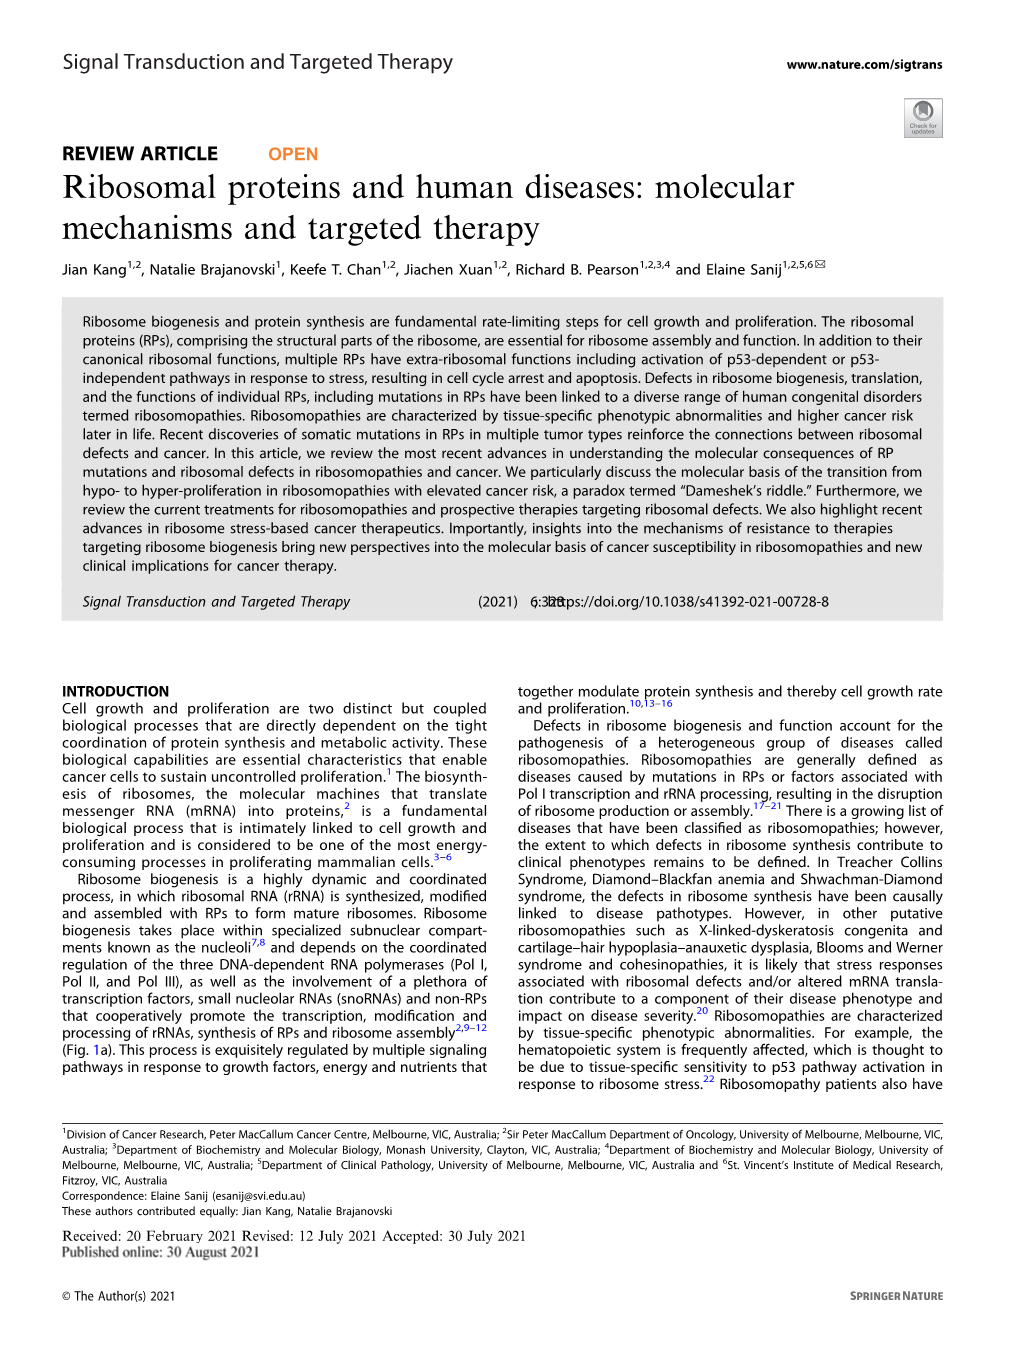 Ribosomal Proteins and Human Diseases: Molecular Mechanisms and Targeted Therapy ✉ Jian Kang1,2, Natalie Brajanovski1, Keefe T